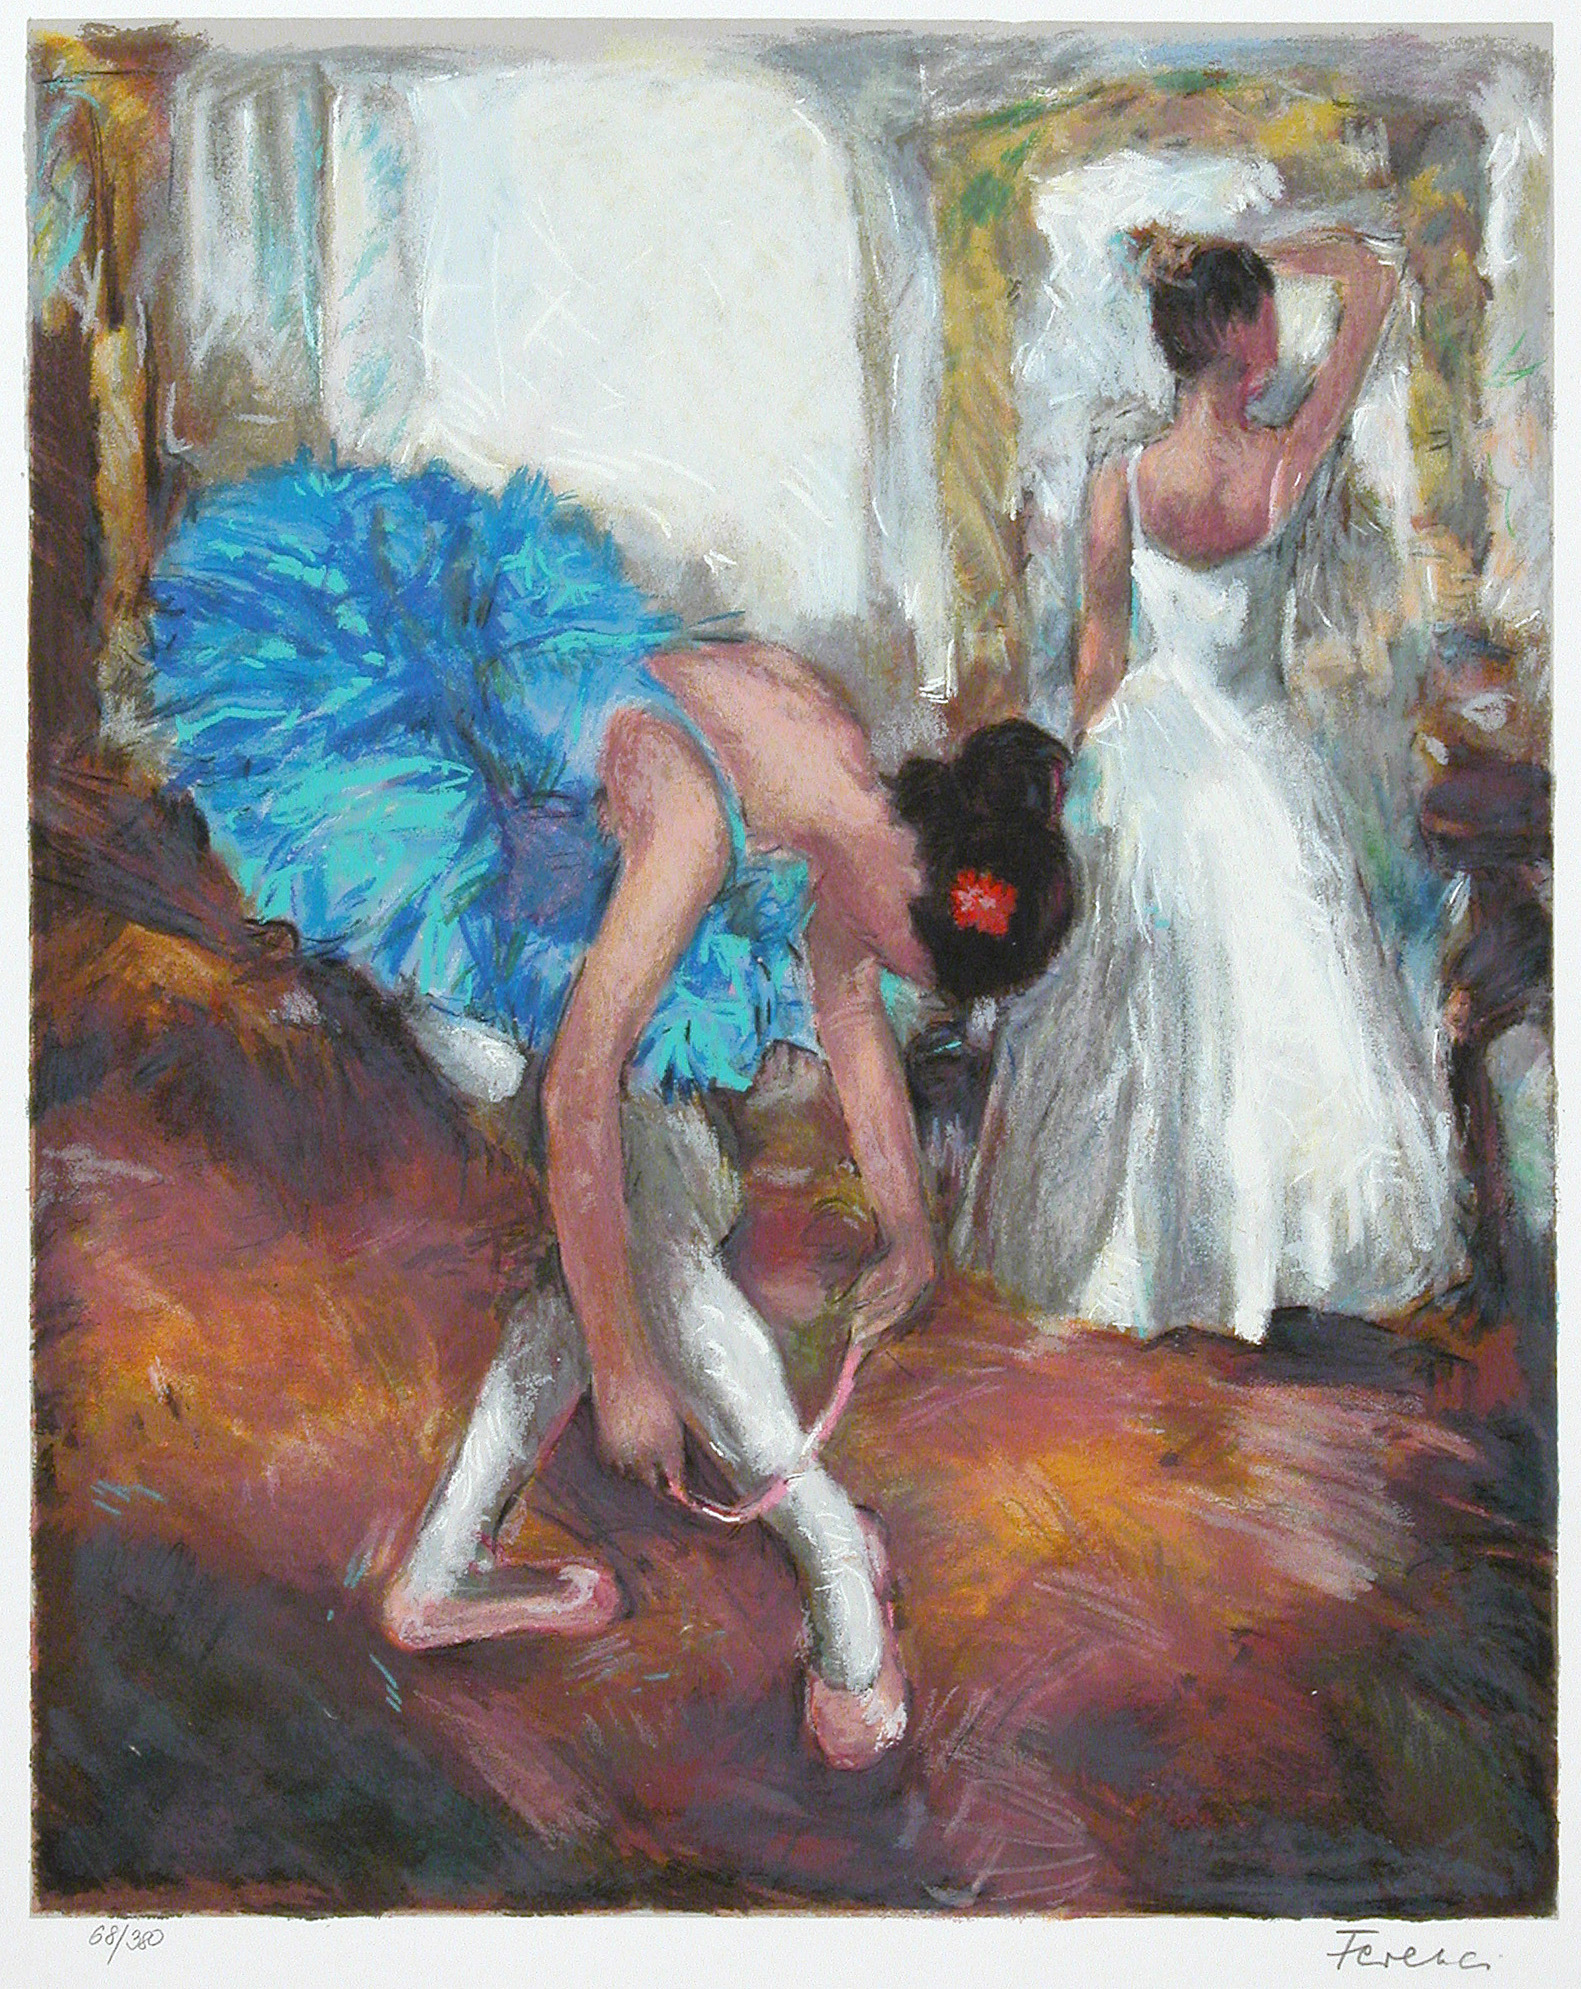 Blue Dancer by Hedva Firenci